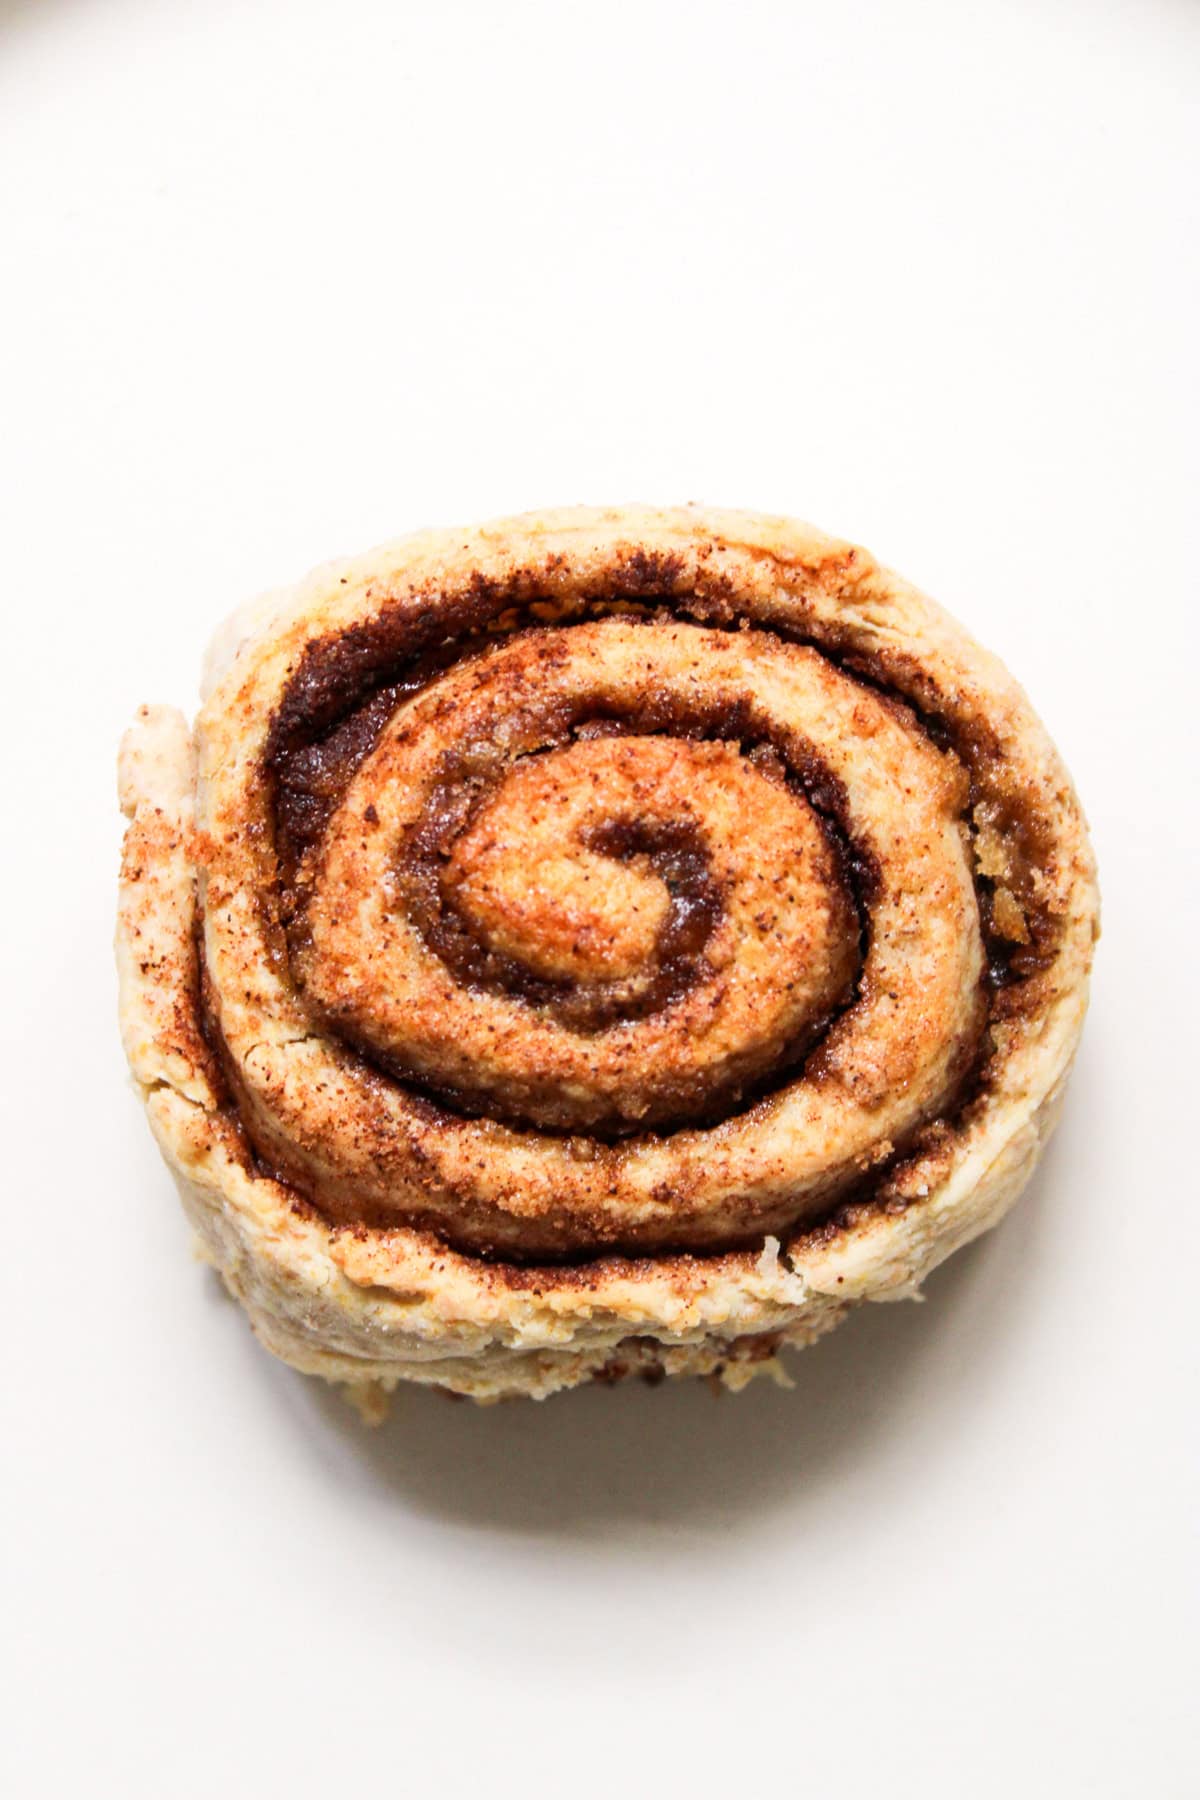 overhead shot of a baked cinnamon roll on a plain white backdrop